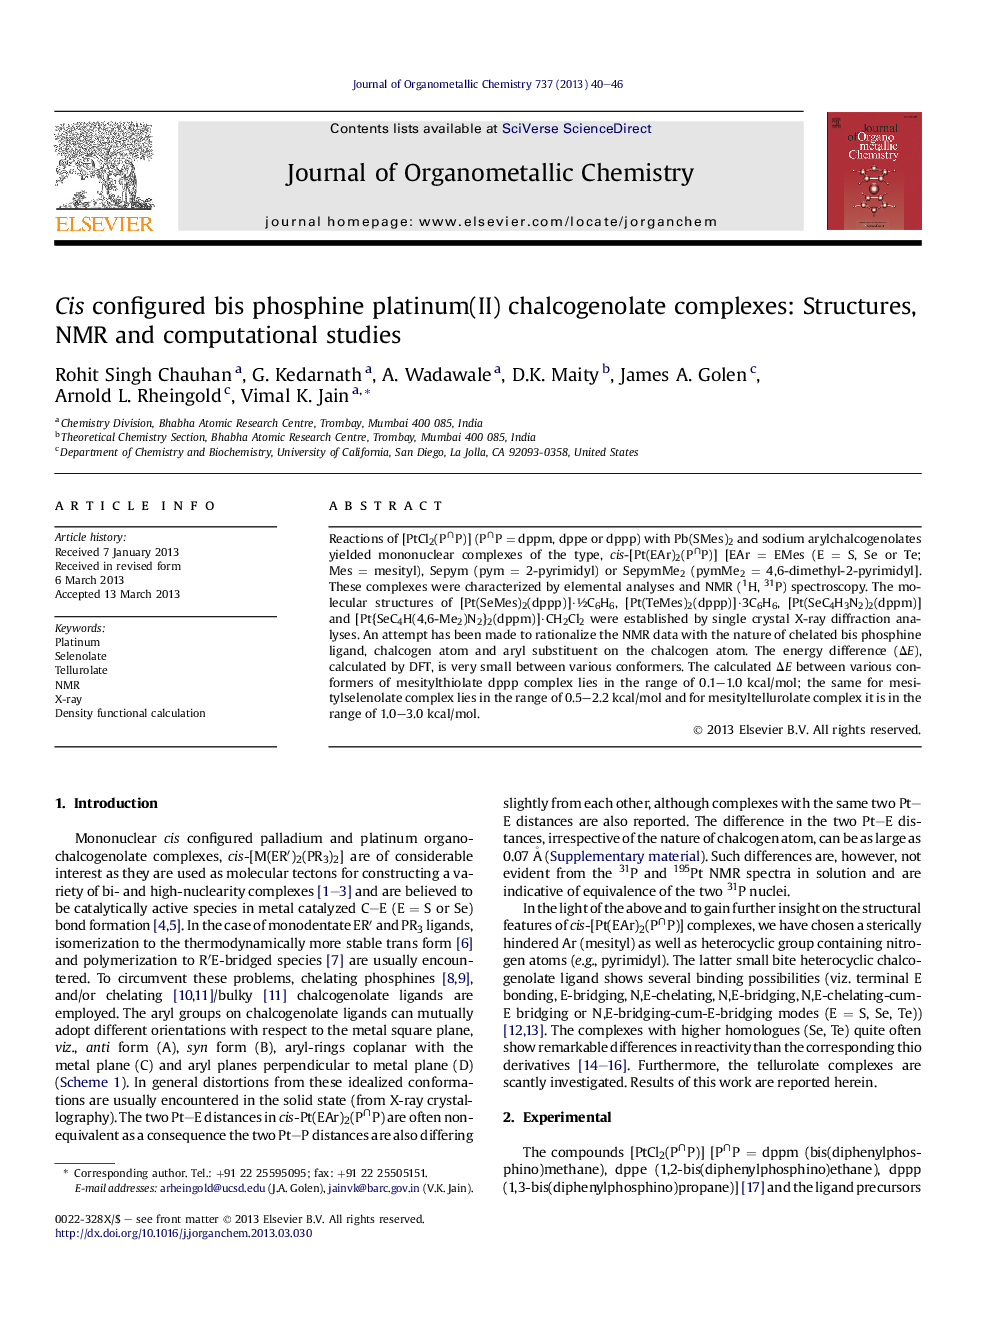 Cis configured bis phosphine platinum(II) chalcogenolate complexes: Structures, NMR and computational studies